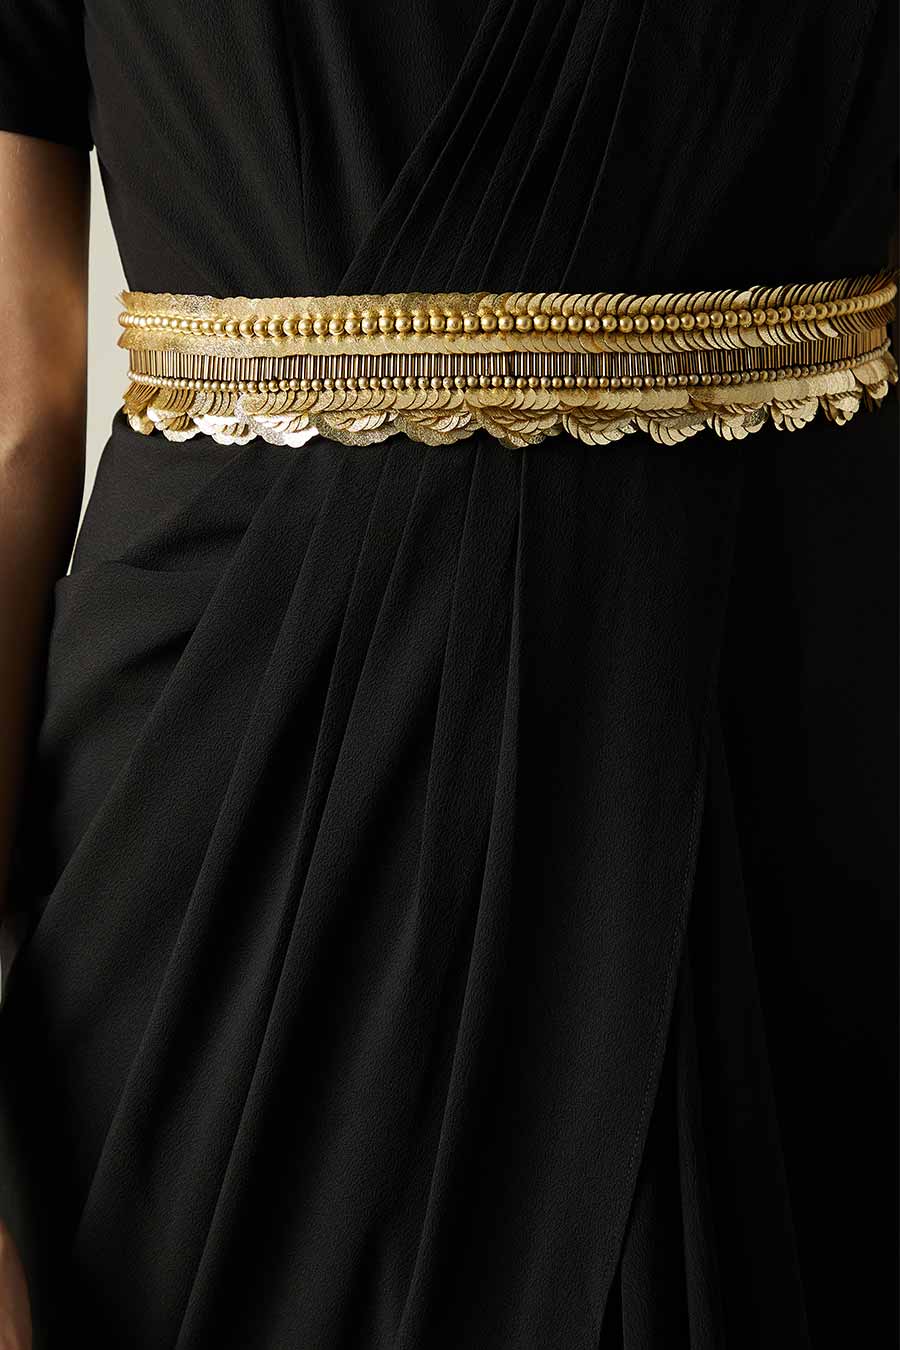 Black Pleated Saree Dress With Molten Gold Belt